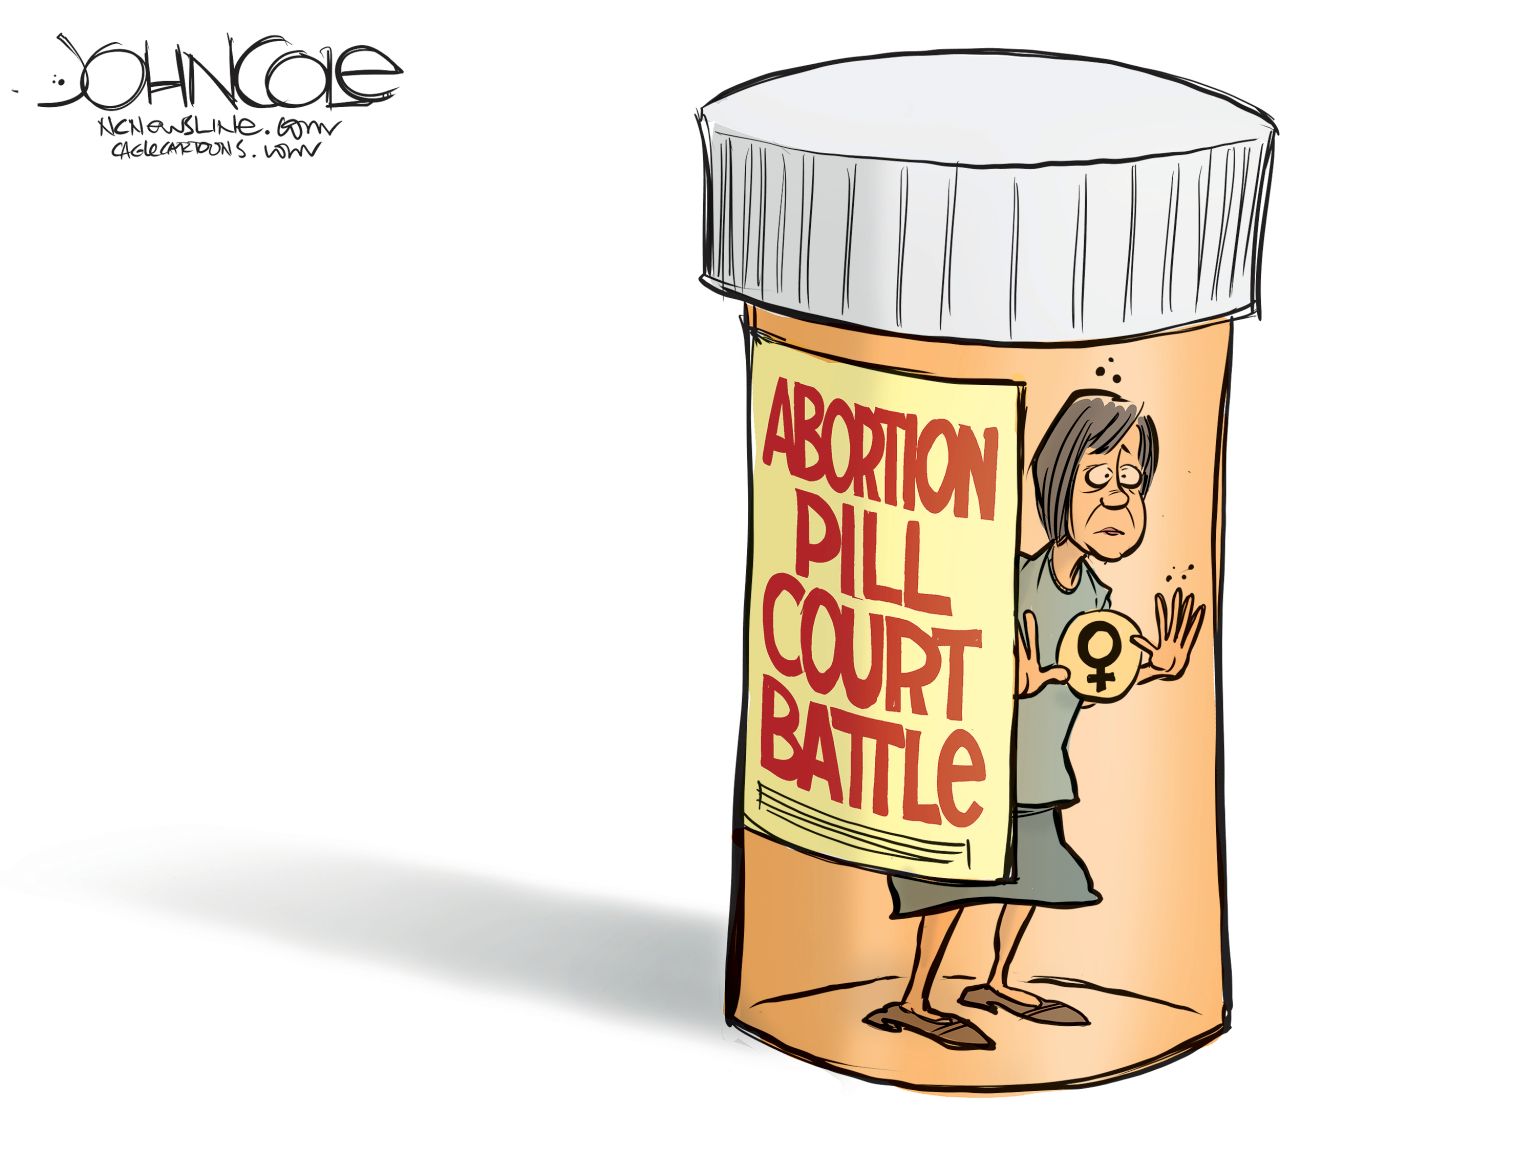 newsjustin.press - Abortion pill court fight - editorial cartoon